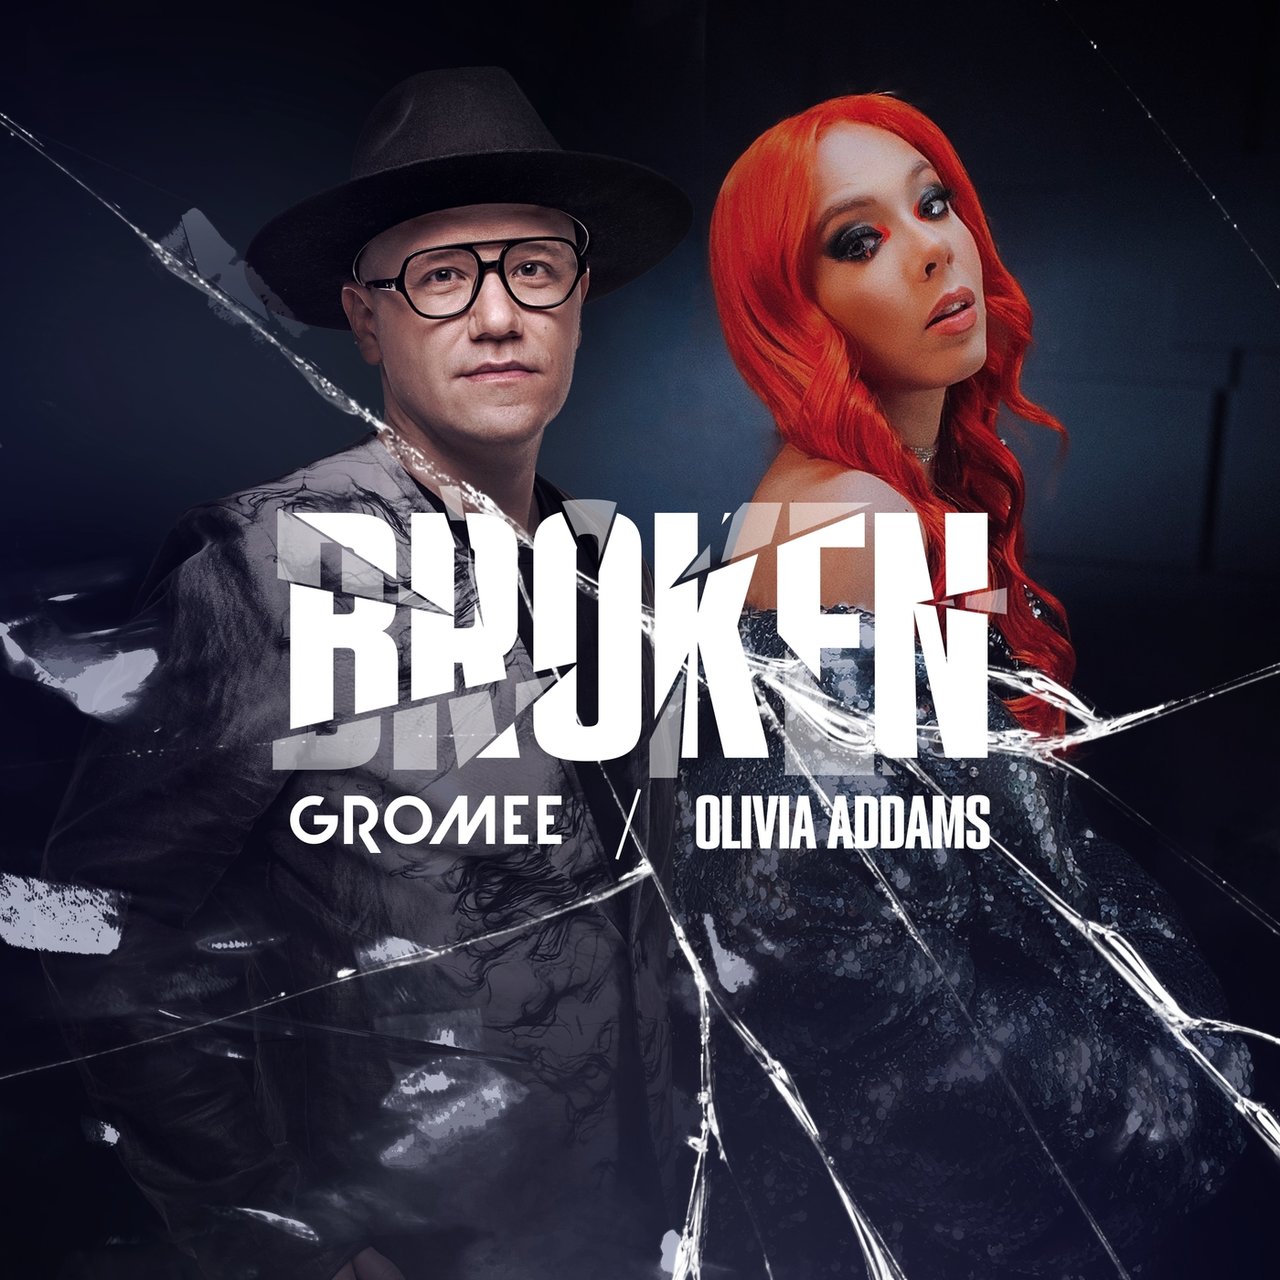 Gromee & Olivia Addams — Broken cover artwork